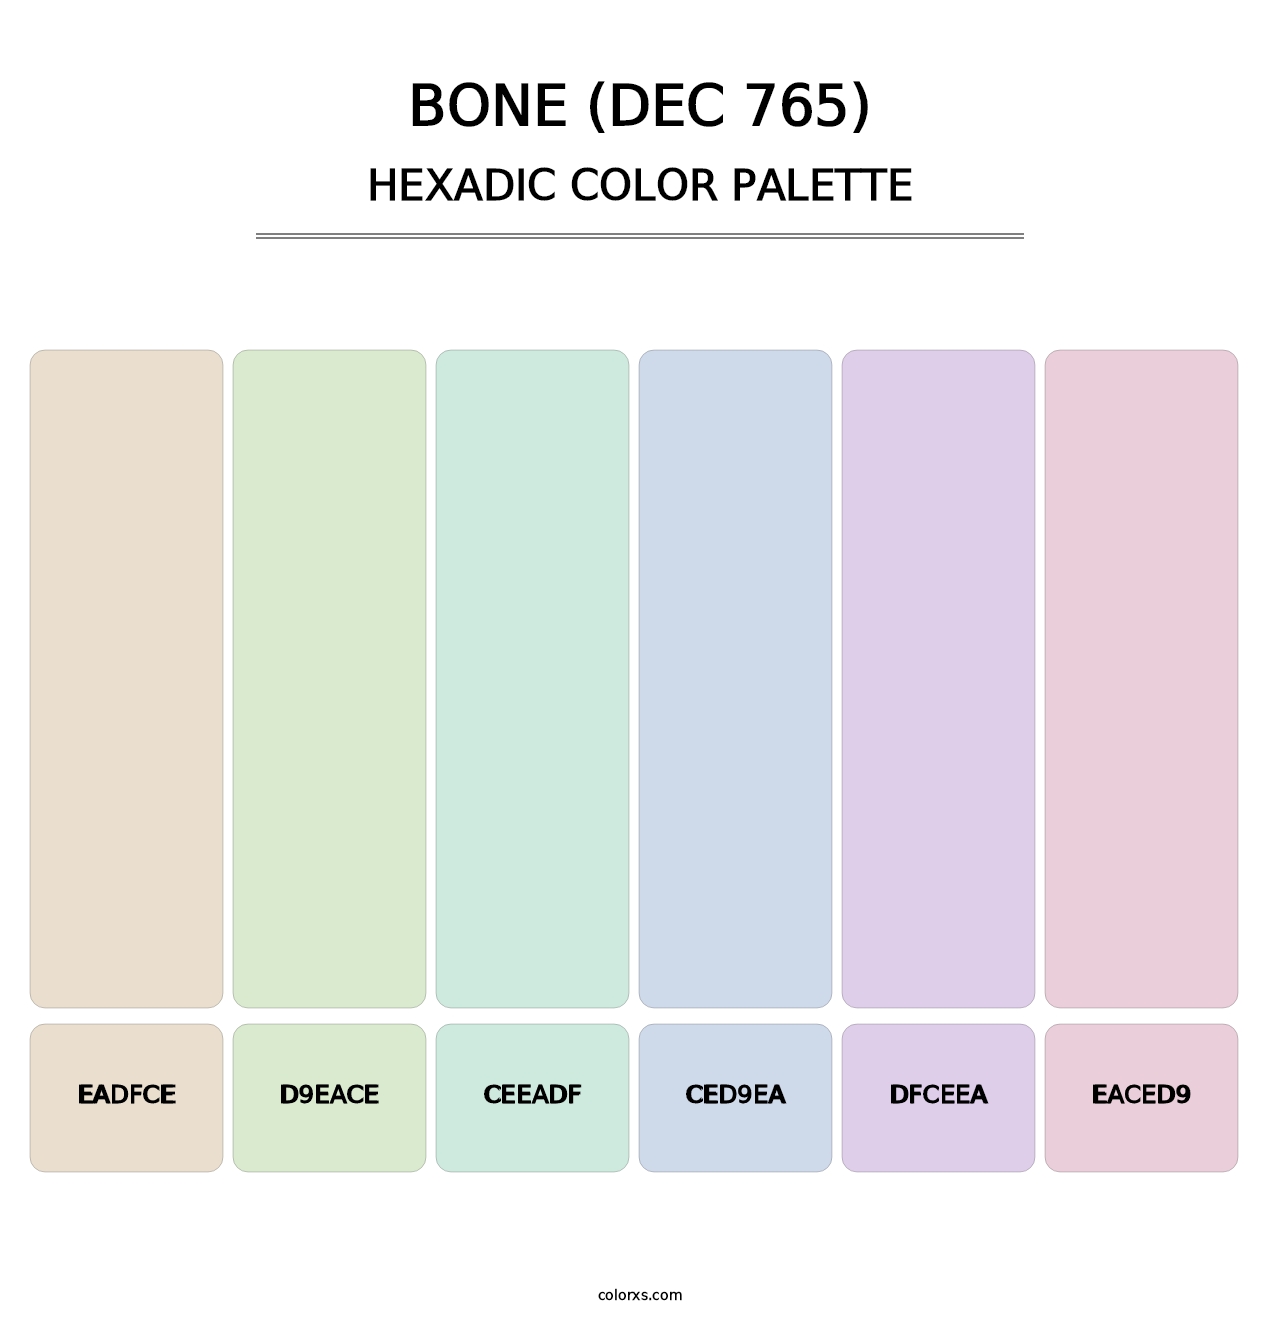 Bone (DEC 765) - Hexadic Color Palette